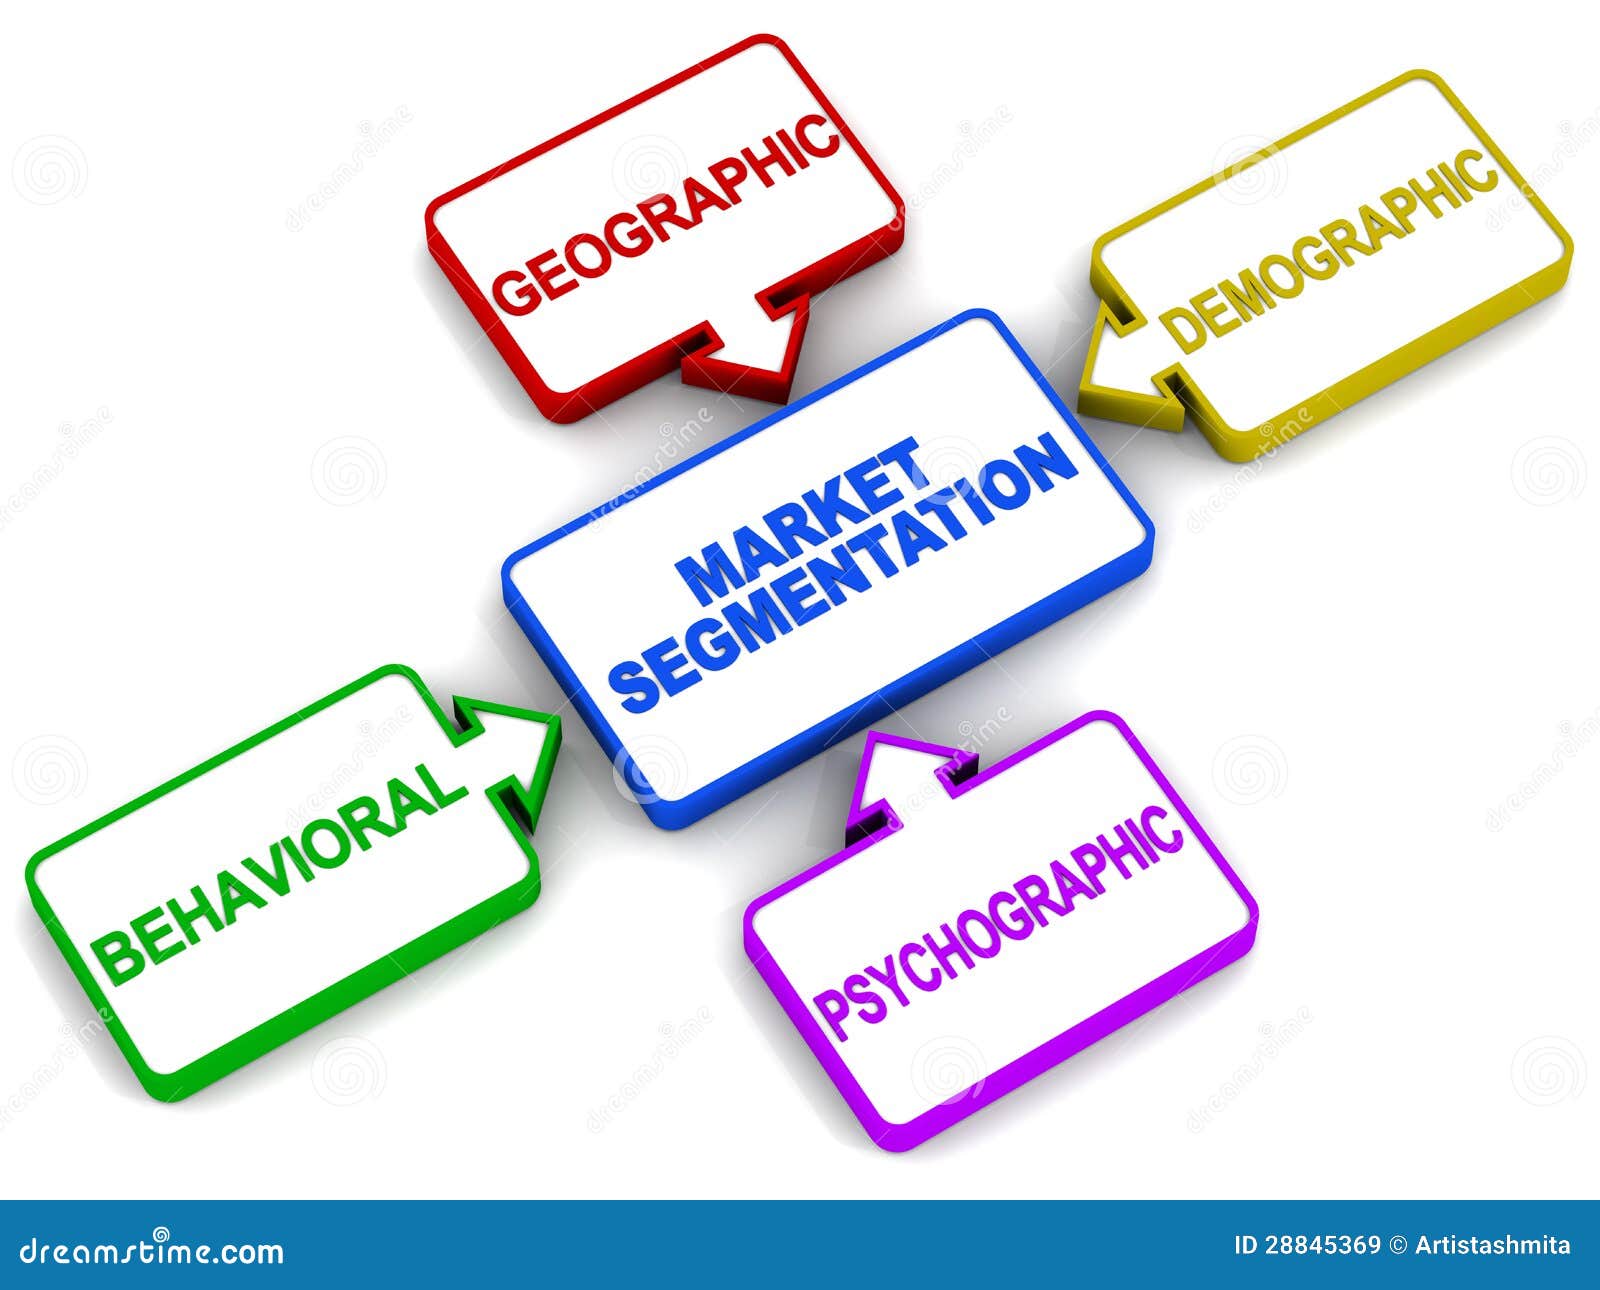 Of market segmentation types Market Segmentation